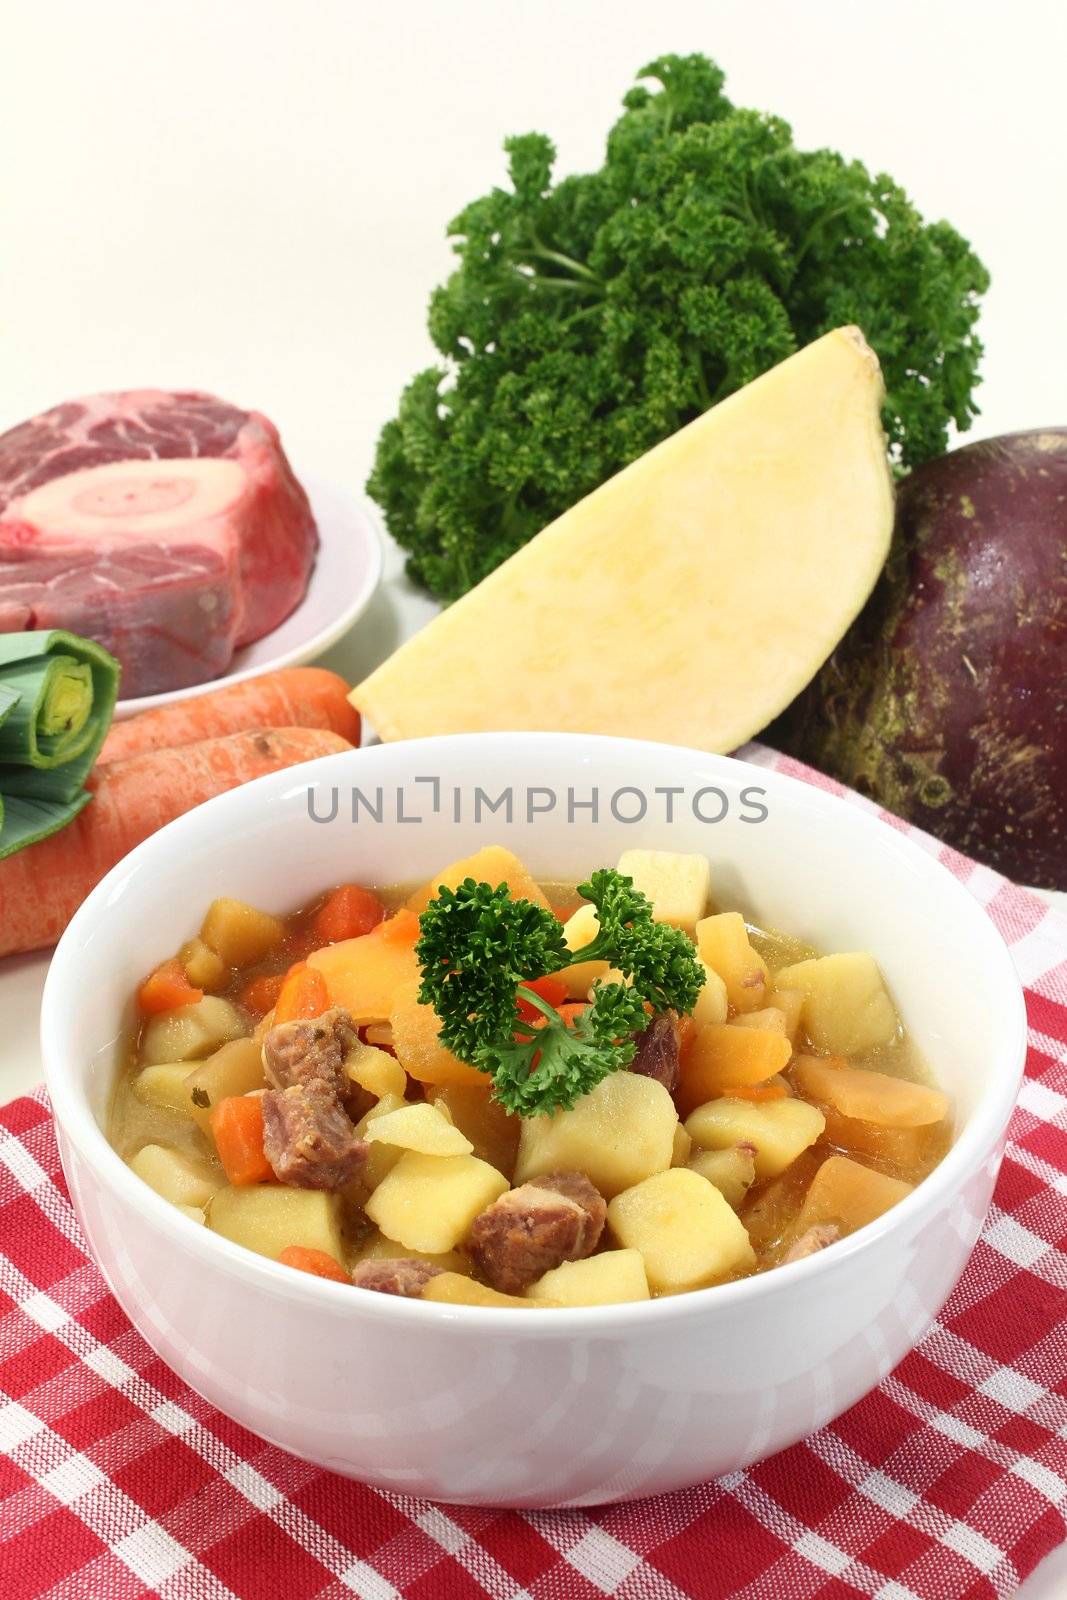 Turnip stew by silencefoto